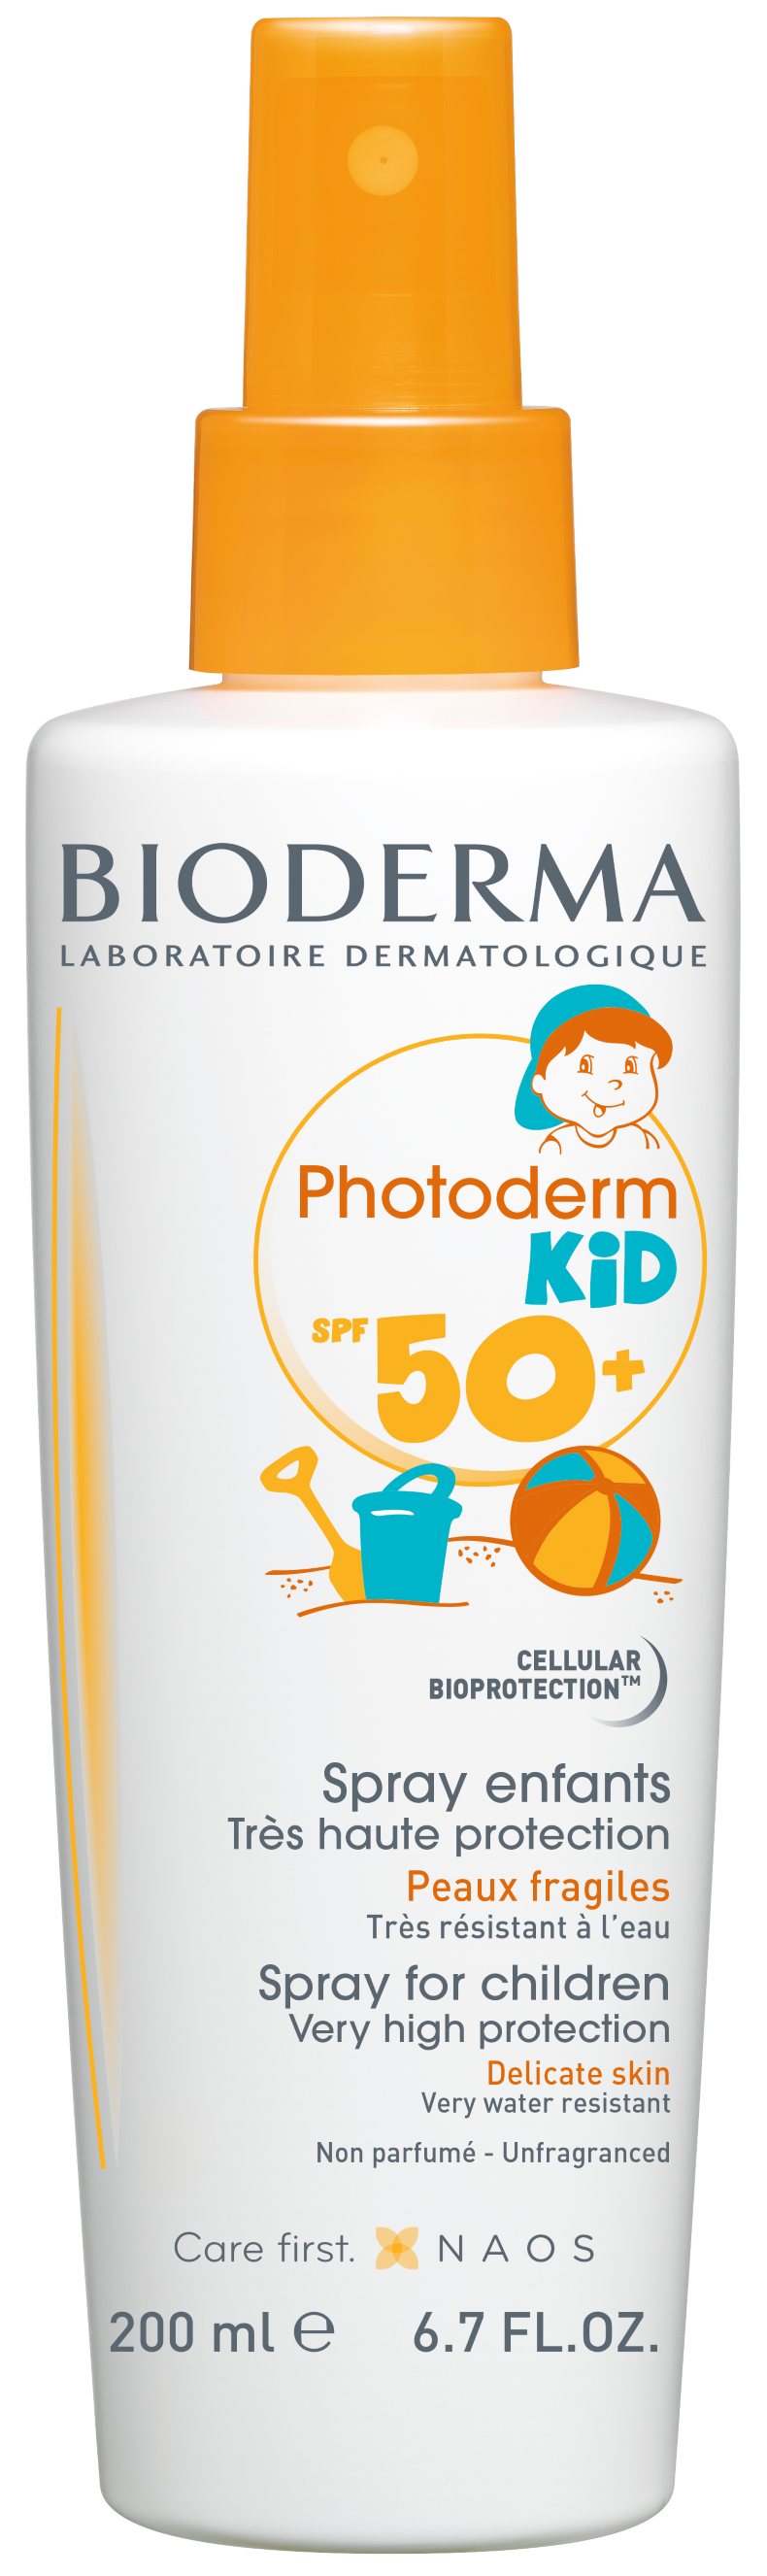 Photoderm Kid SPF50+ spray - Bioderma